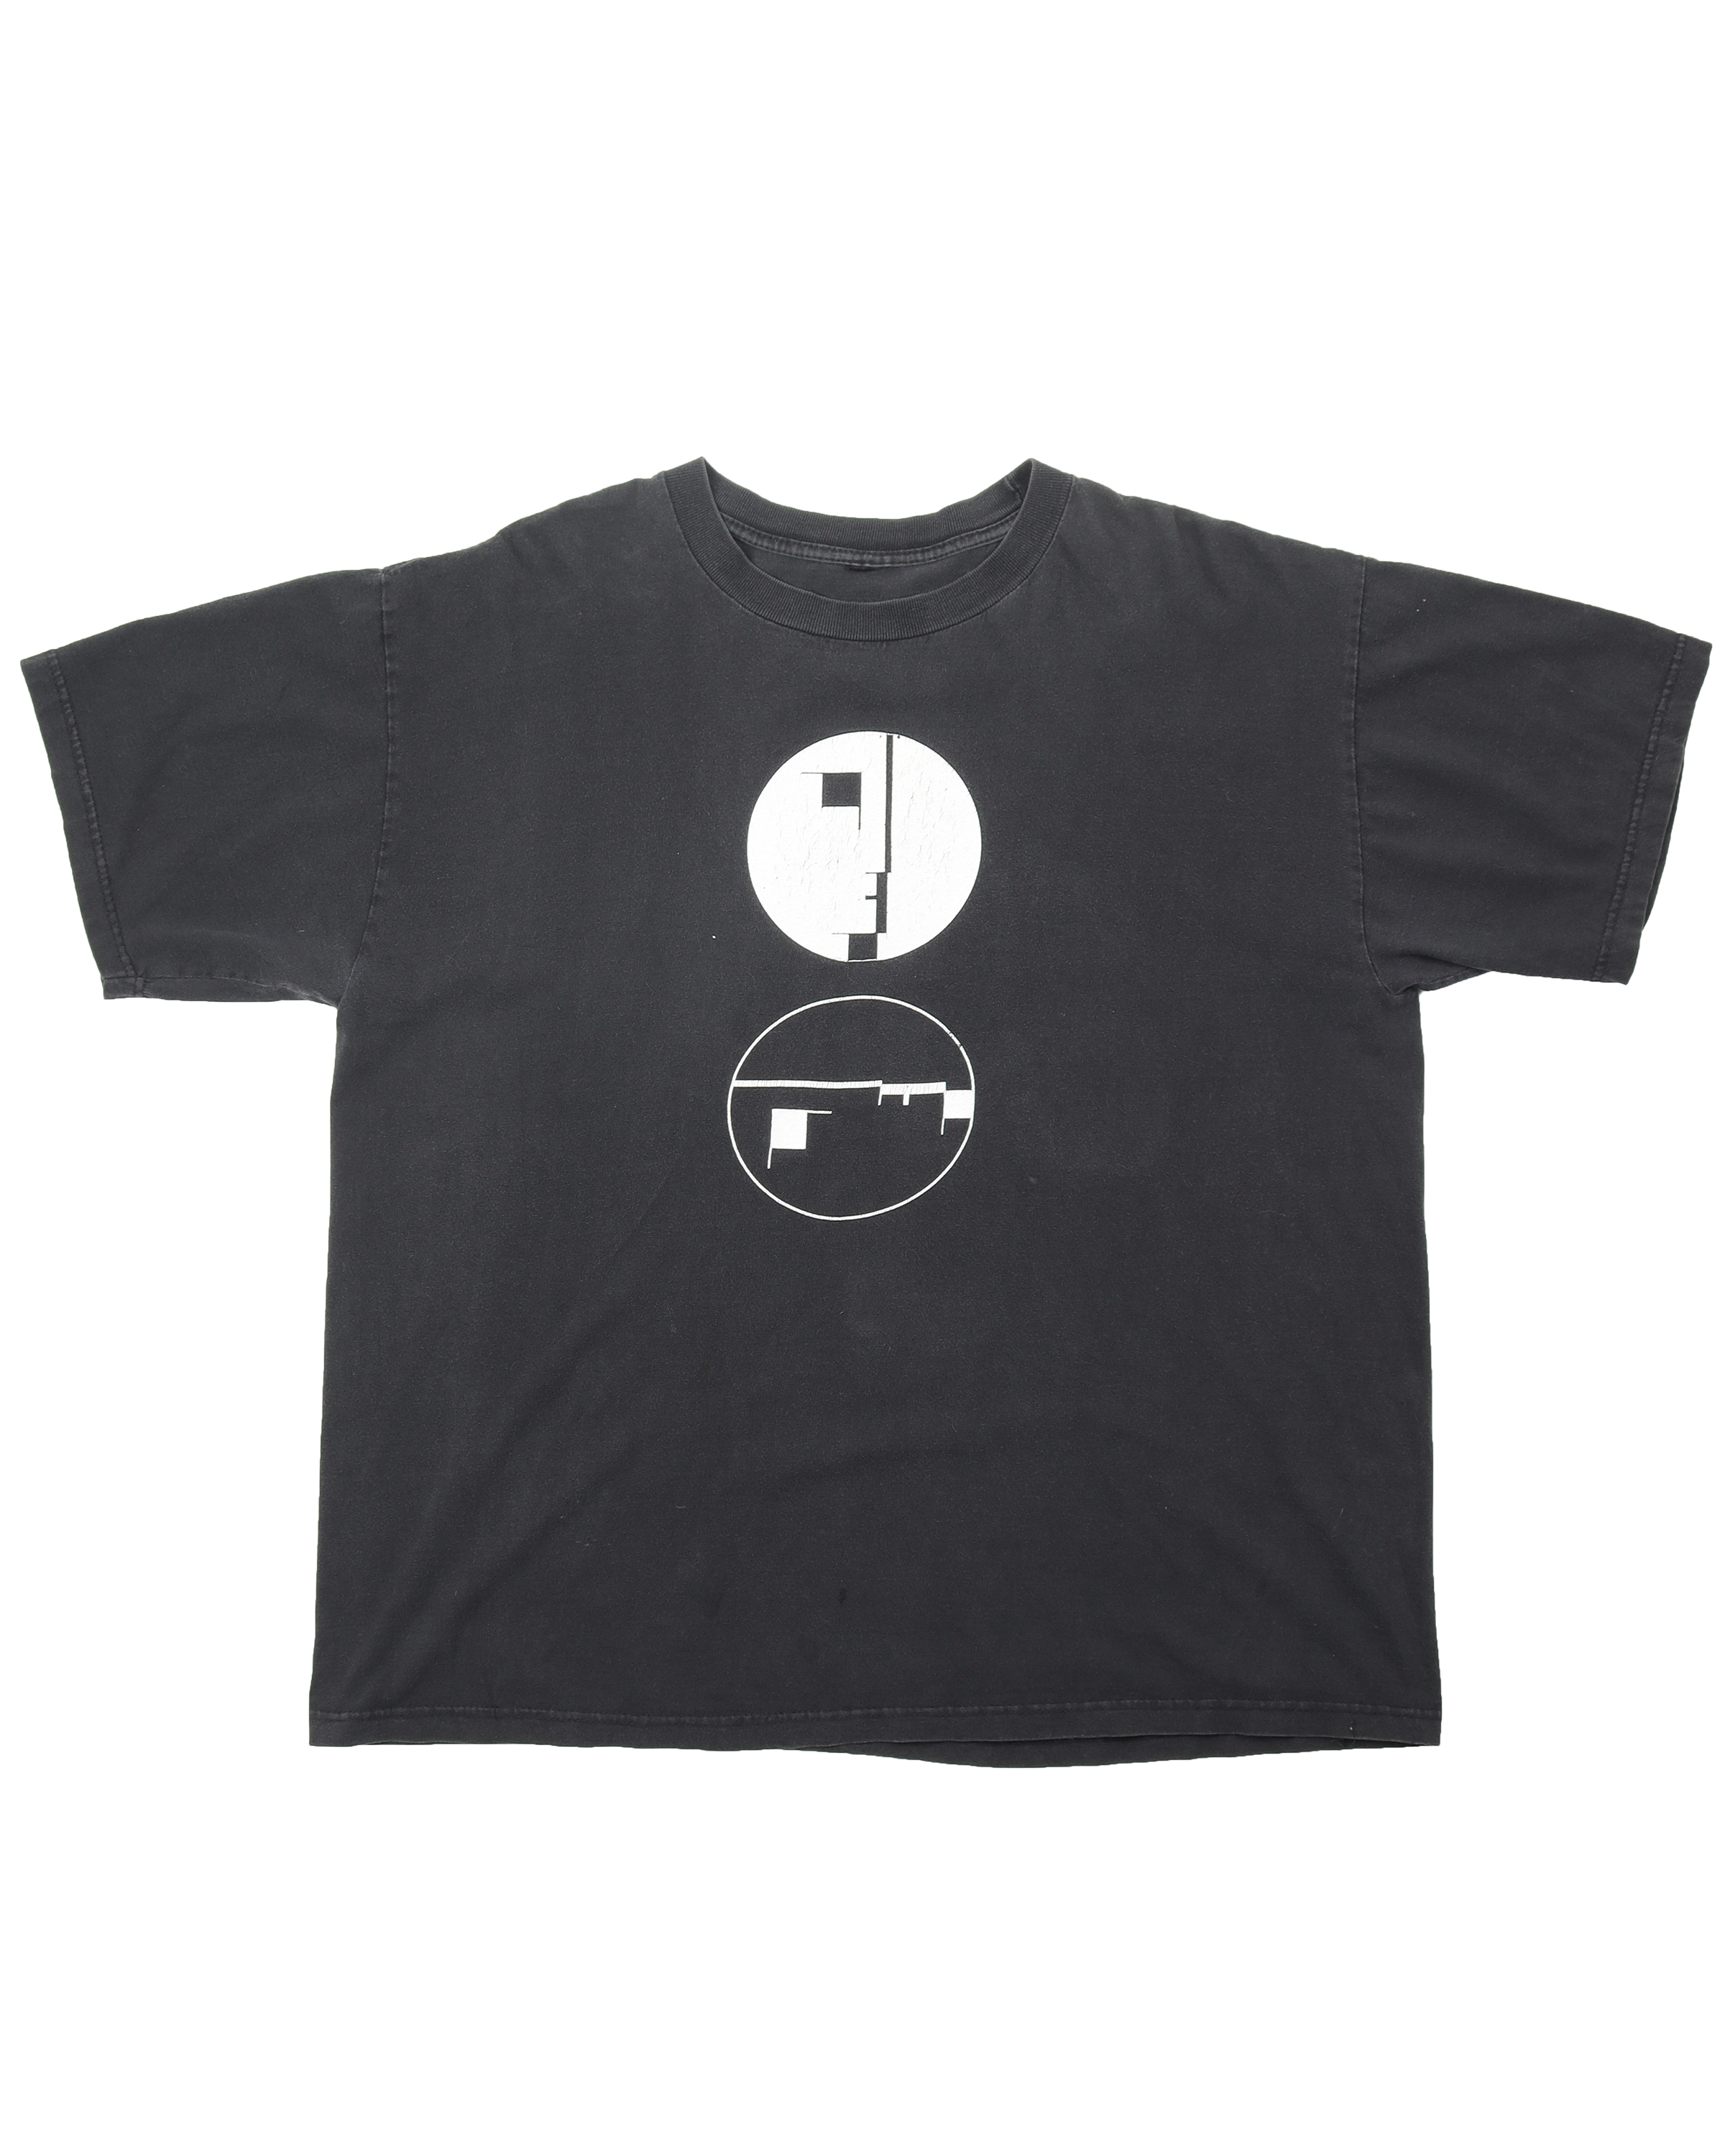 1998 Bauhaus Resurrection T-Shirt